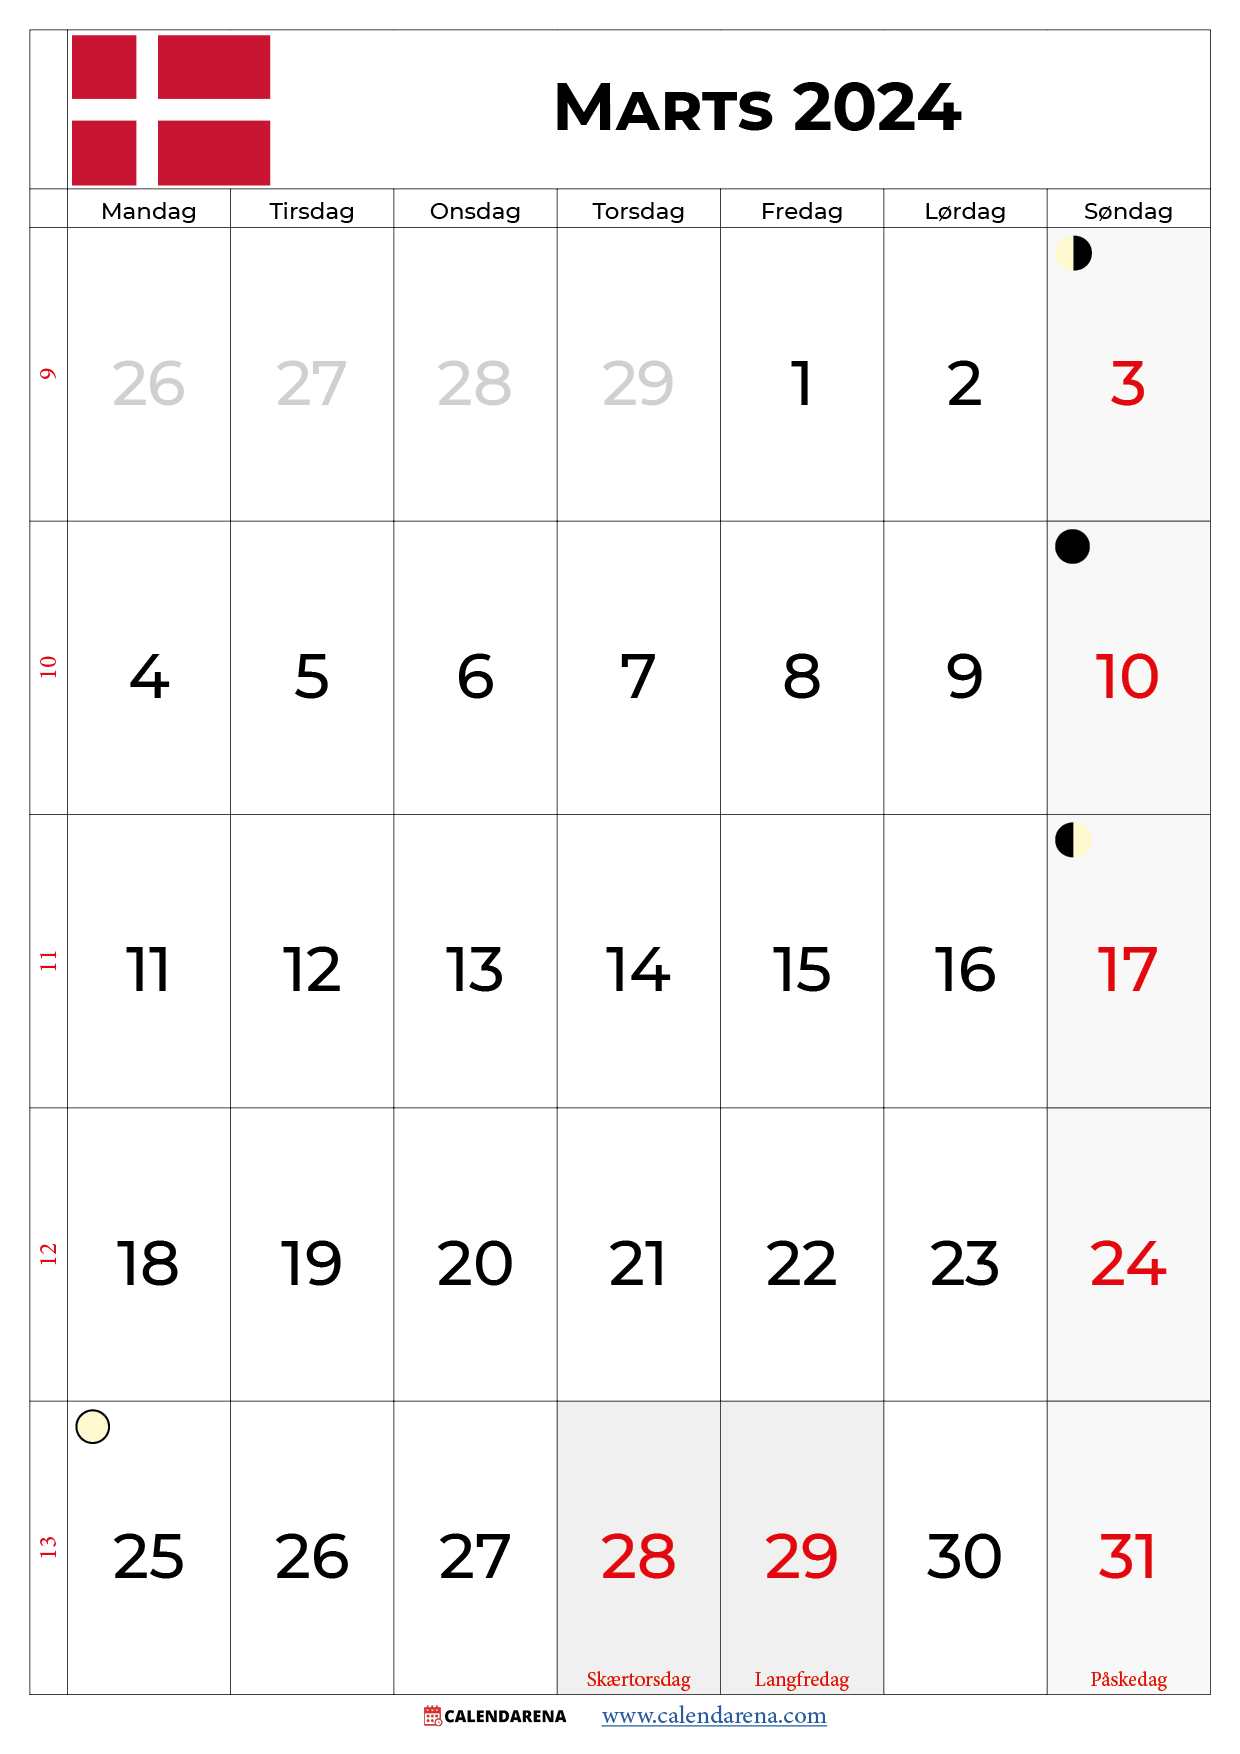 marts kalender 2024 danmark